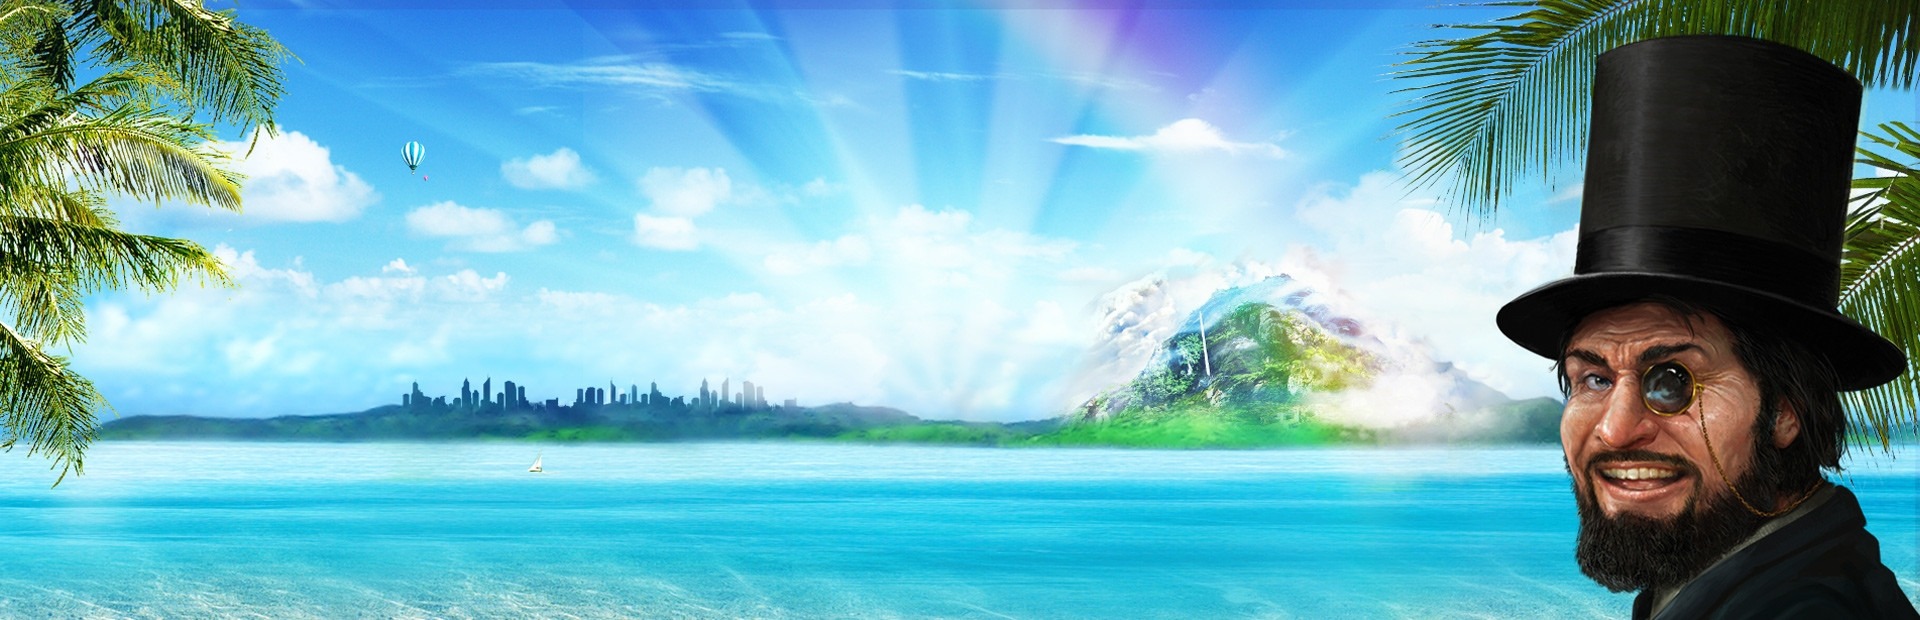 Banner Tropico 5 - Mad World